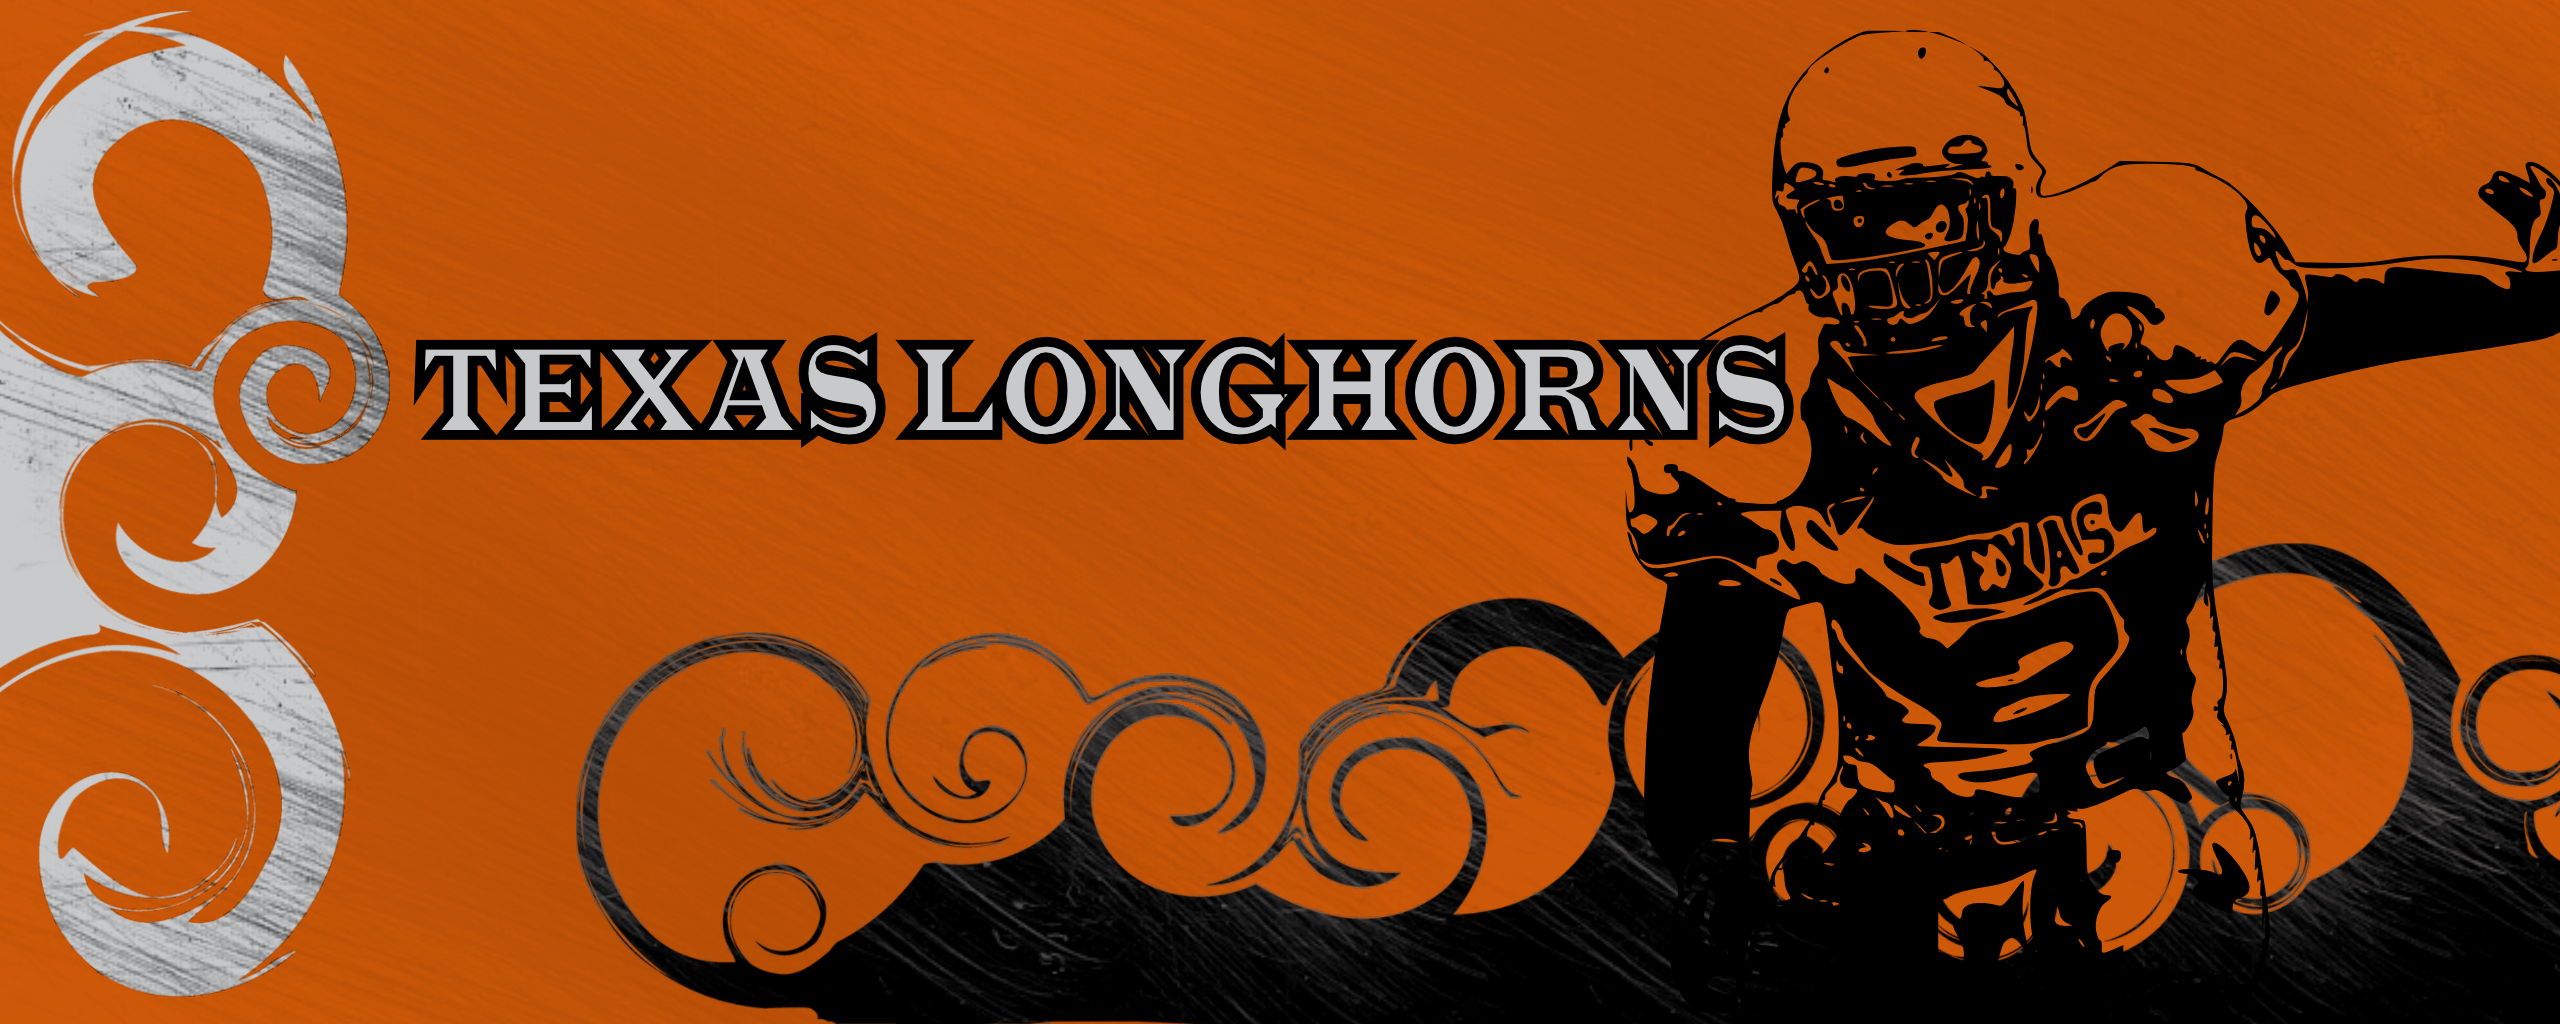 Hd Wallpapers Texas Longhorns Logo 400 X 300 18 Kb Jpeg HD